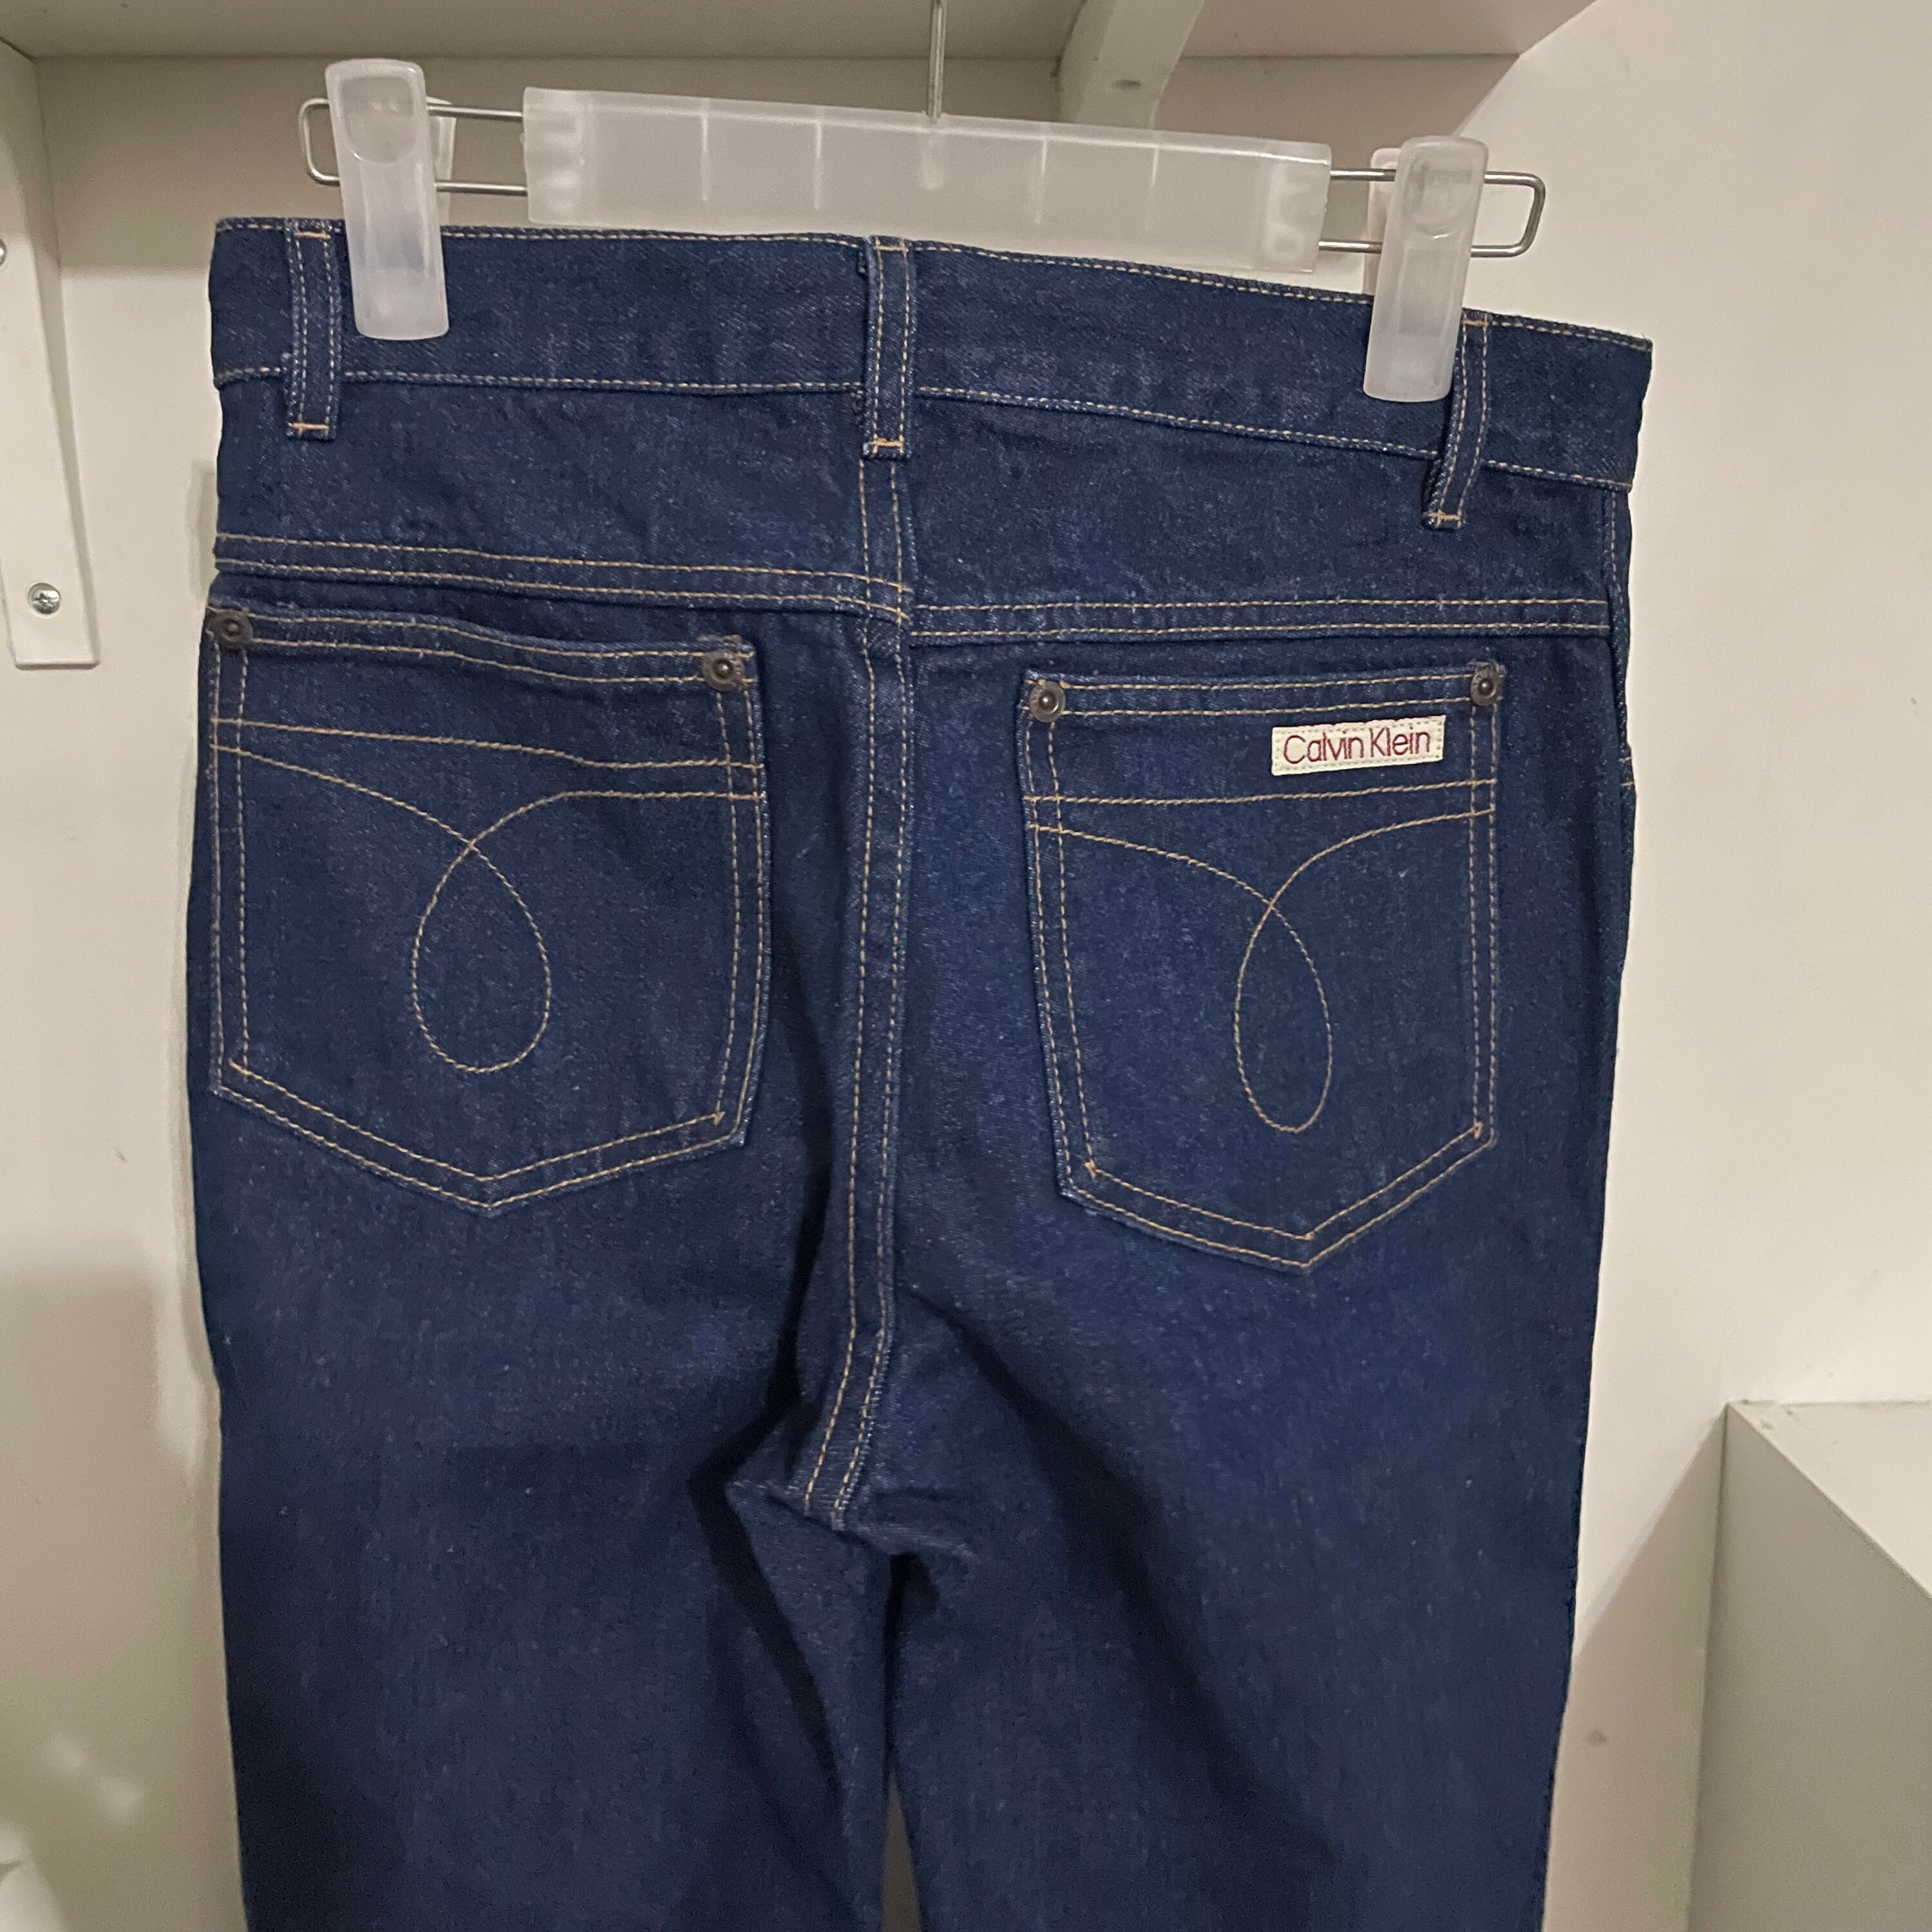 Ck Jeans 80s - Etsy